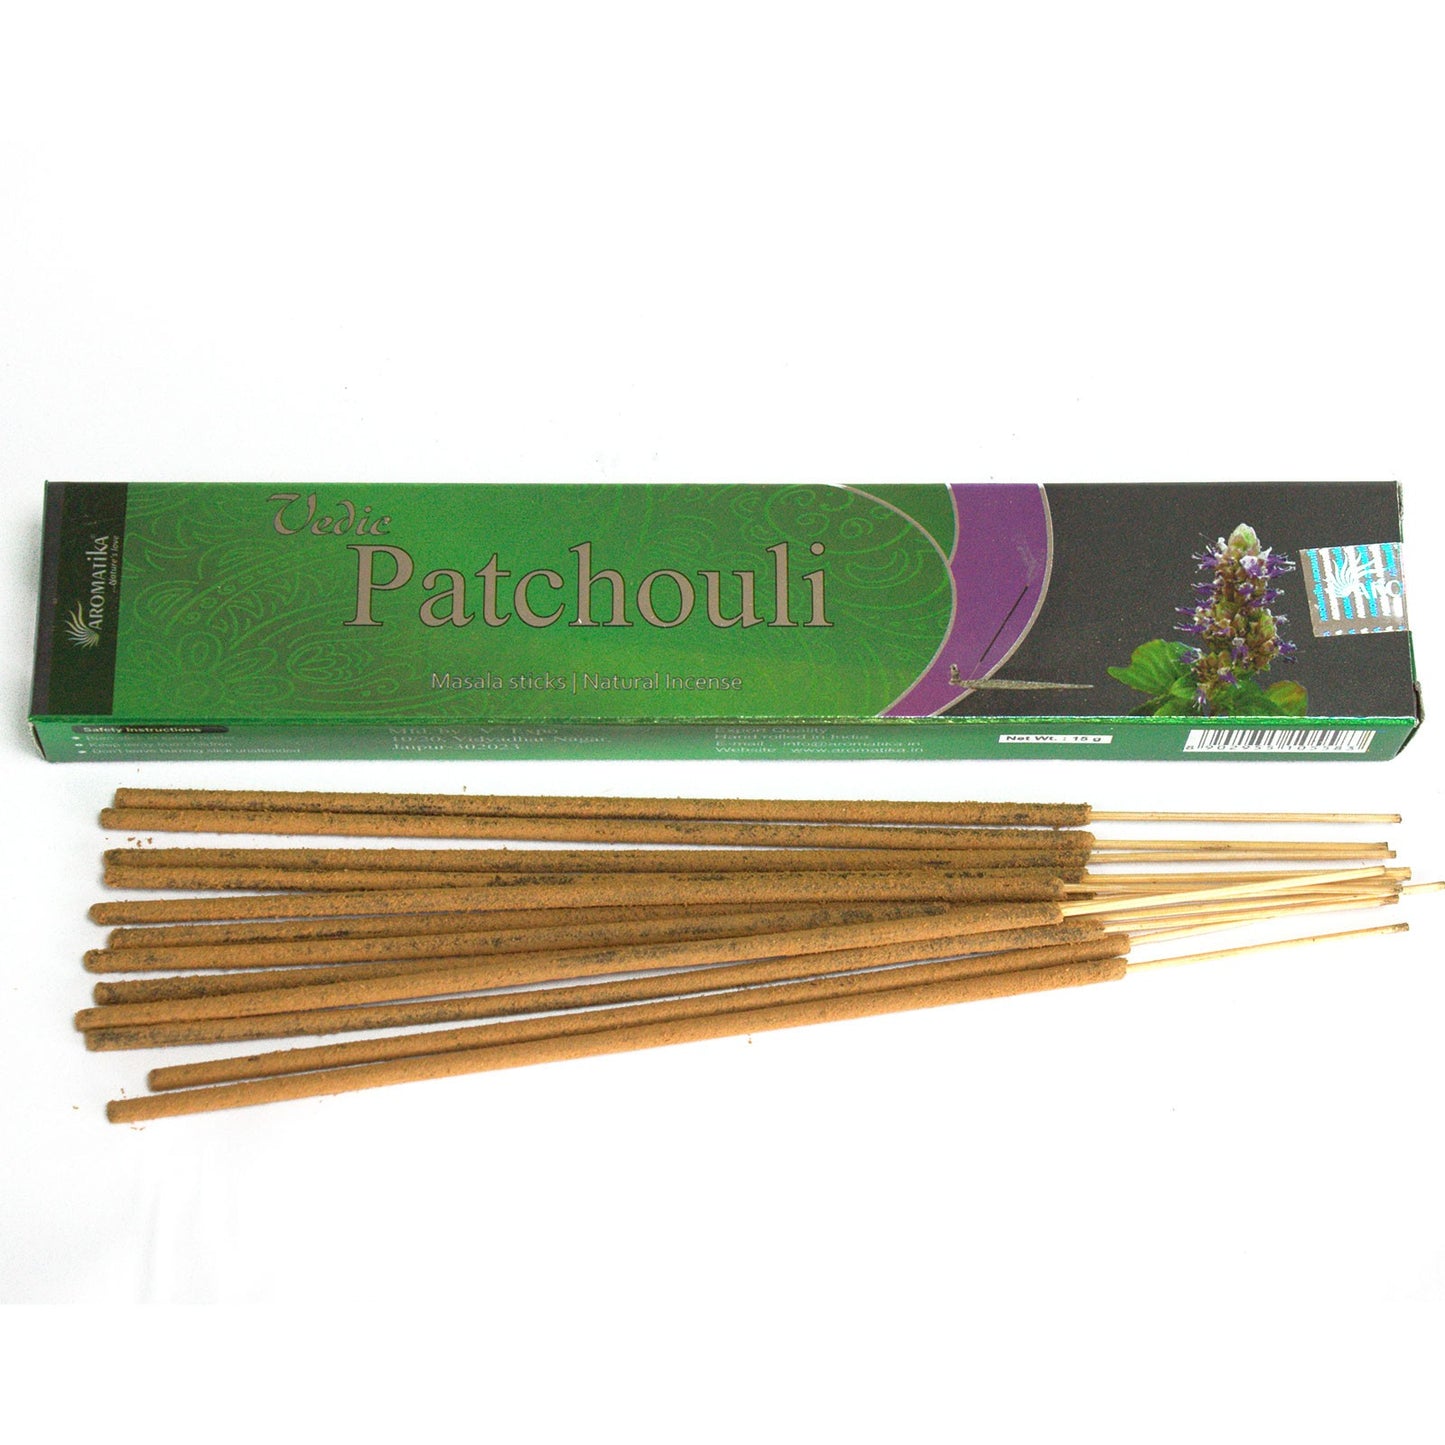 Aromatika Vedic Incense Sticks - Asst